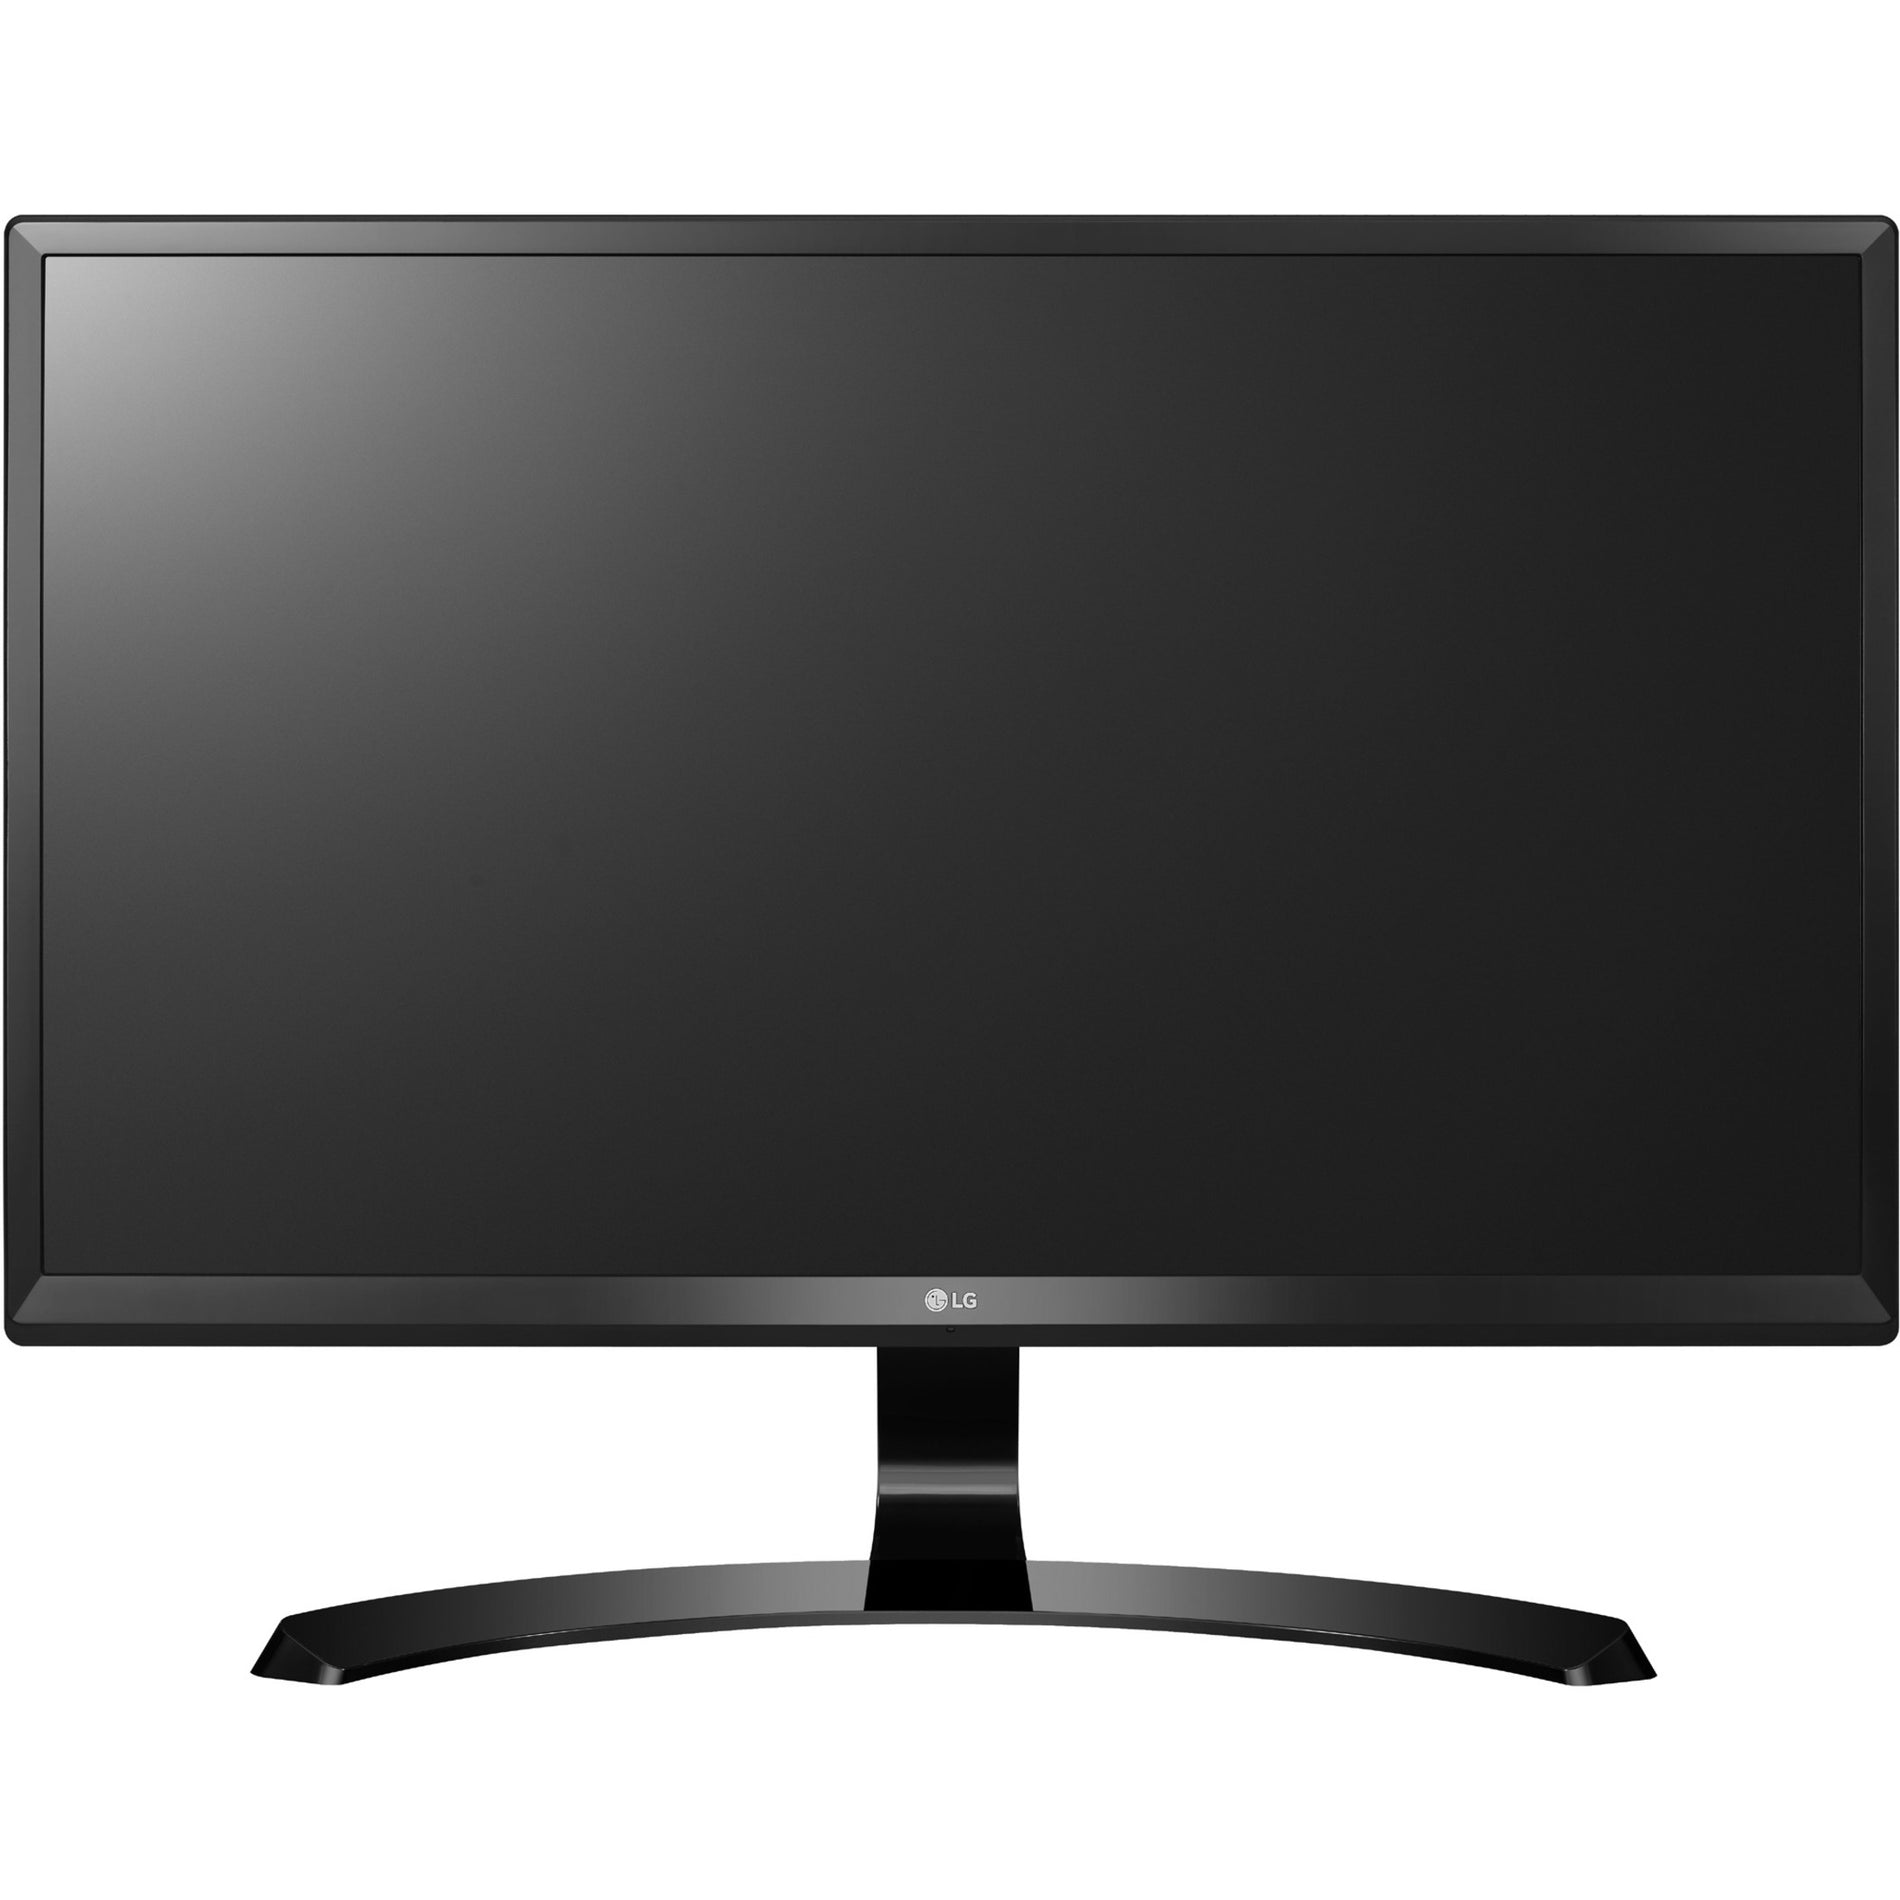 LG 24UD58-B.AUS 24UD58-B 23.8" 4K UHD Gaming LCD Monitor - Immersive Gaming Experience, FreeSync Technology